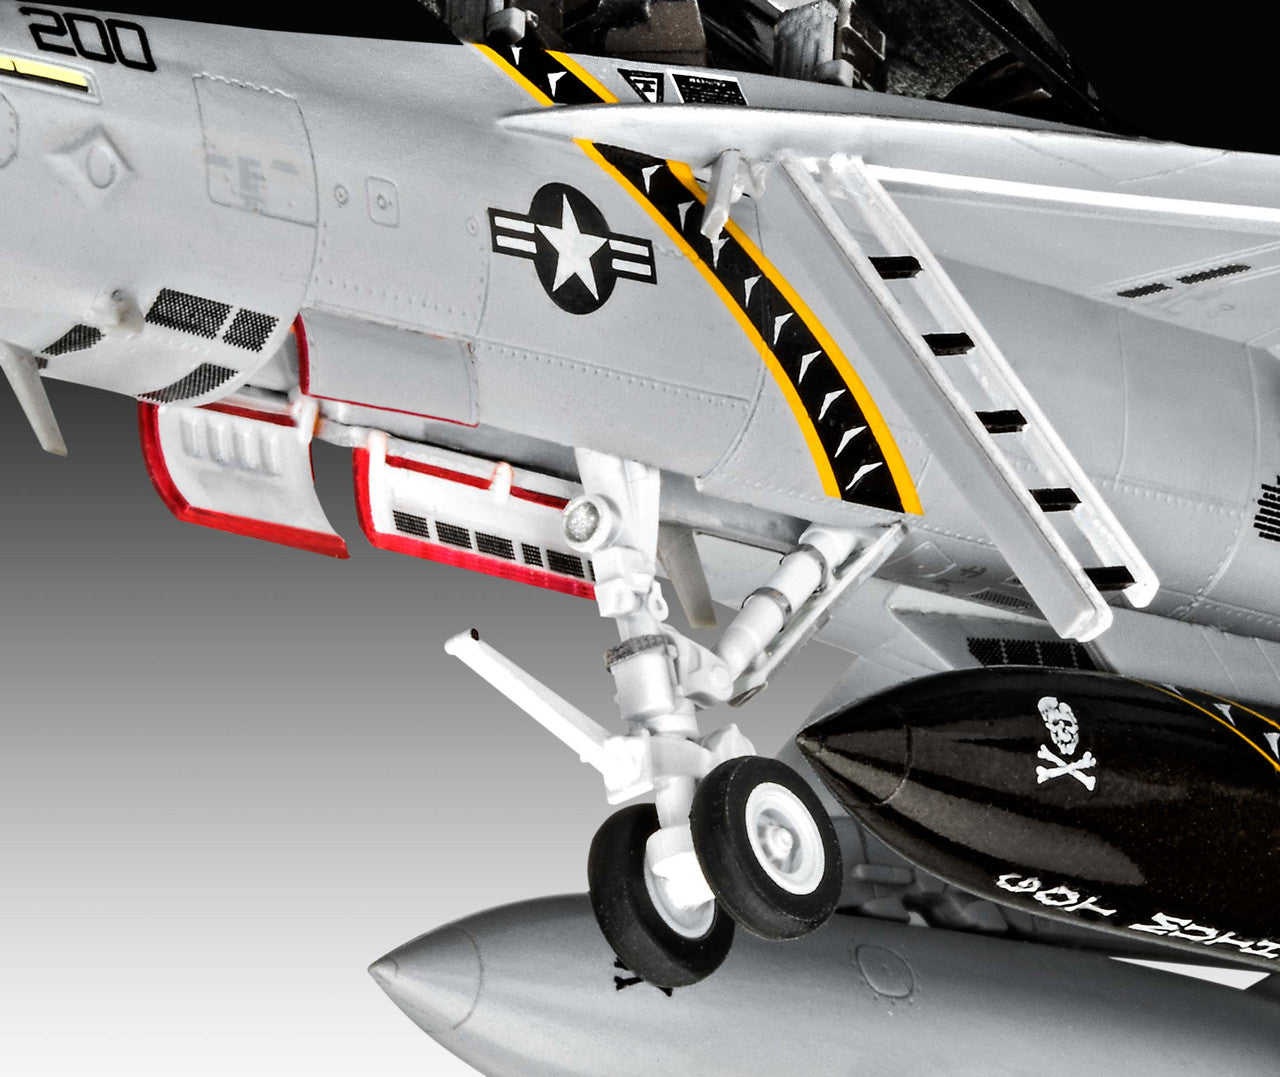 F/A-18F Super Hornet (1:72) - Loaded Dice